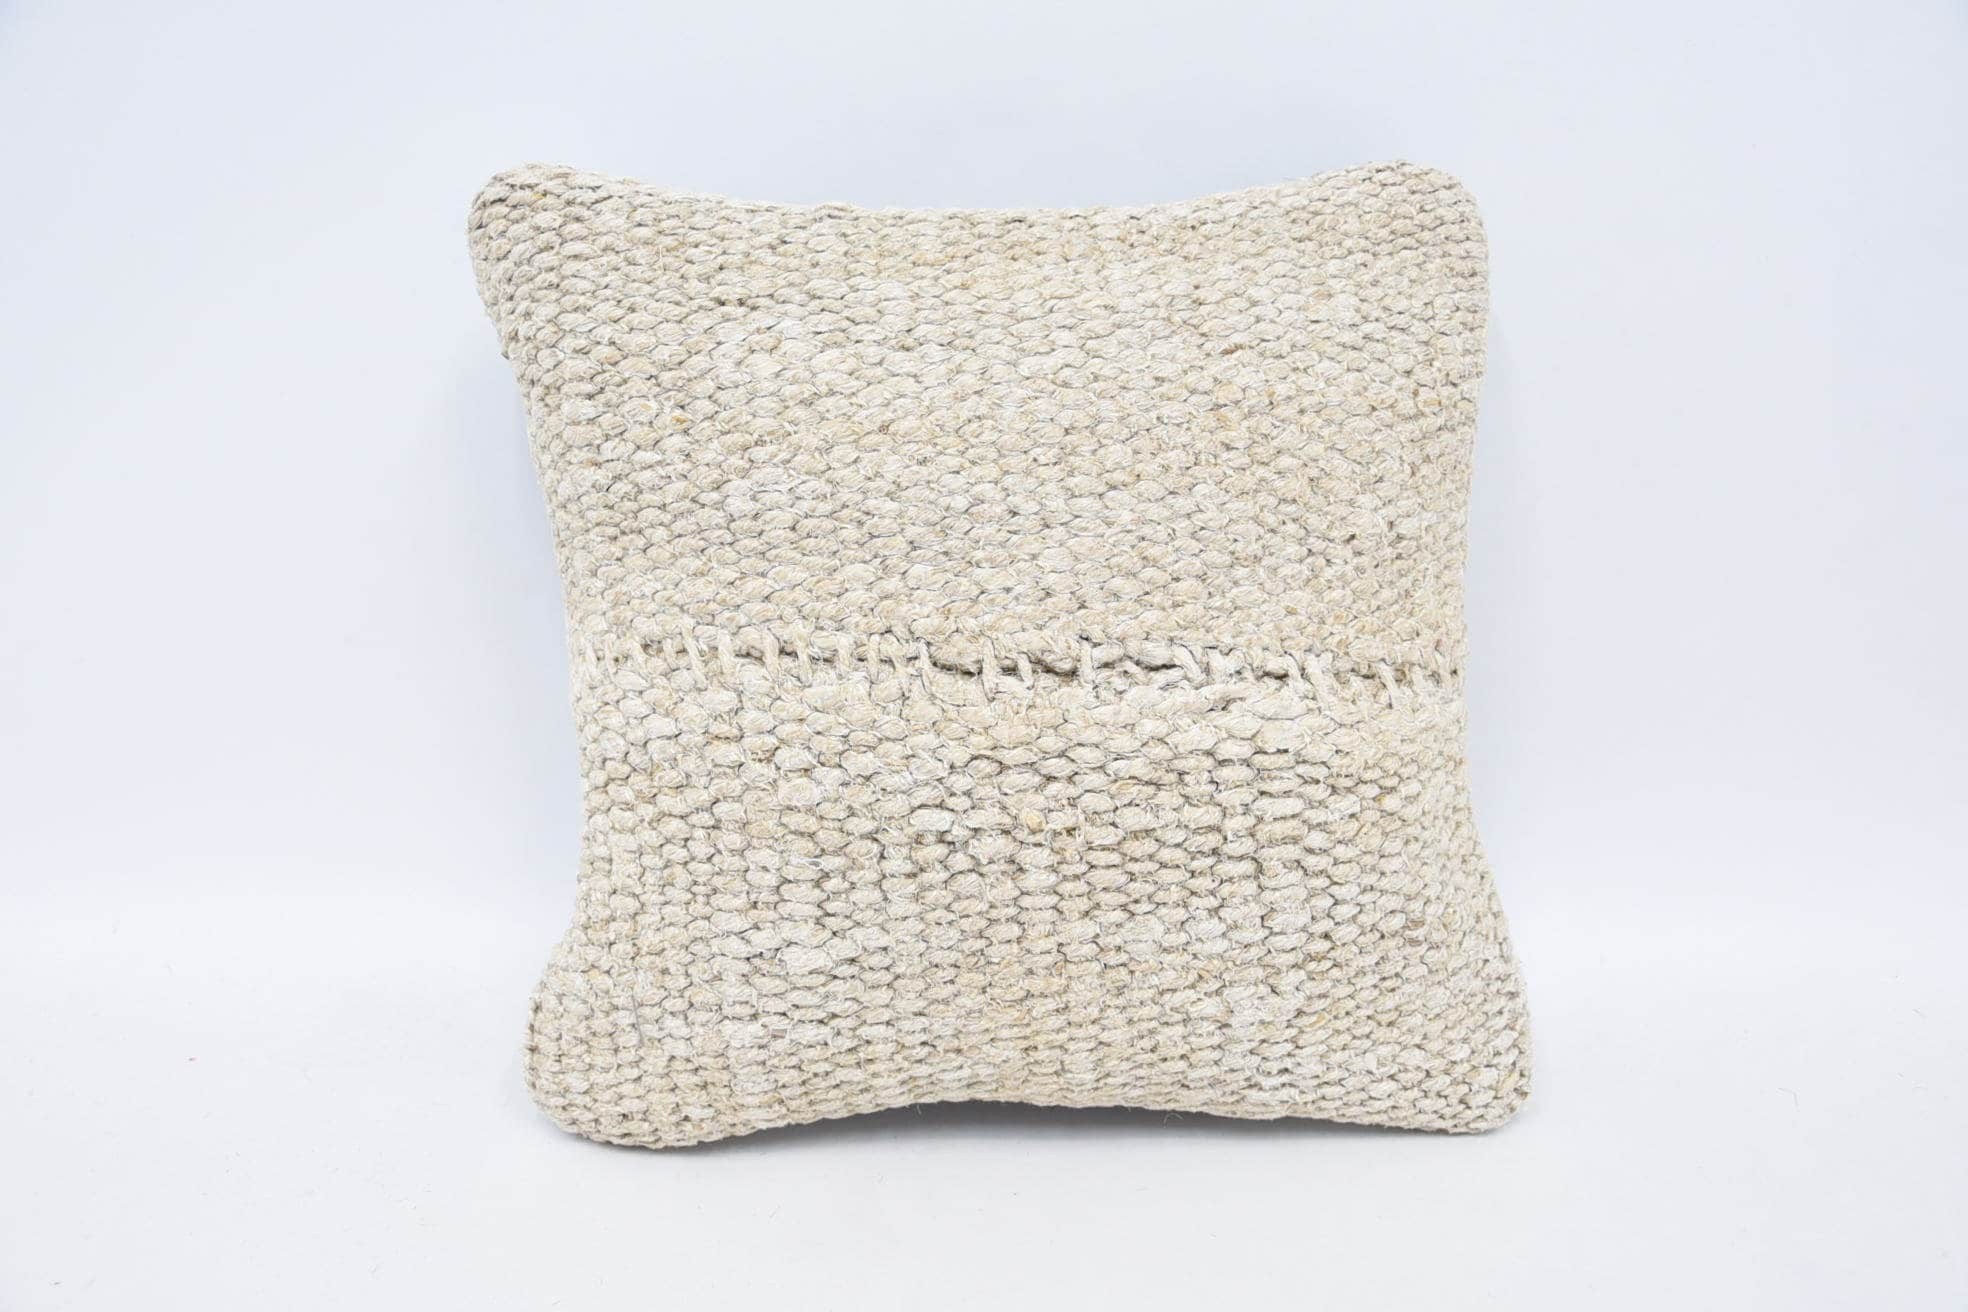 Ethnical Kilim Rug Pillow, Outdoor Bolster Pillow Cover, Antique Pillows, Throw Kilim Pillow, Aztec Cushion Cover, 12"x12" White Pillow